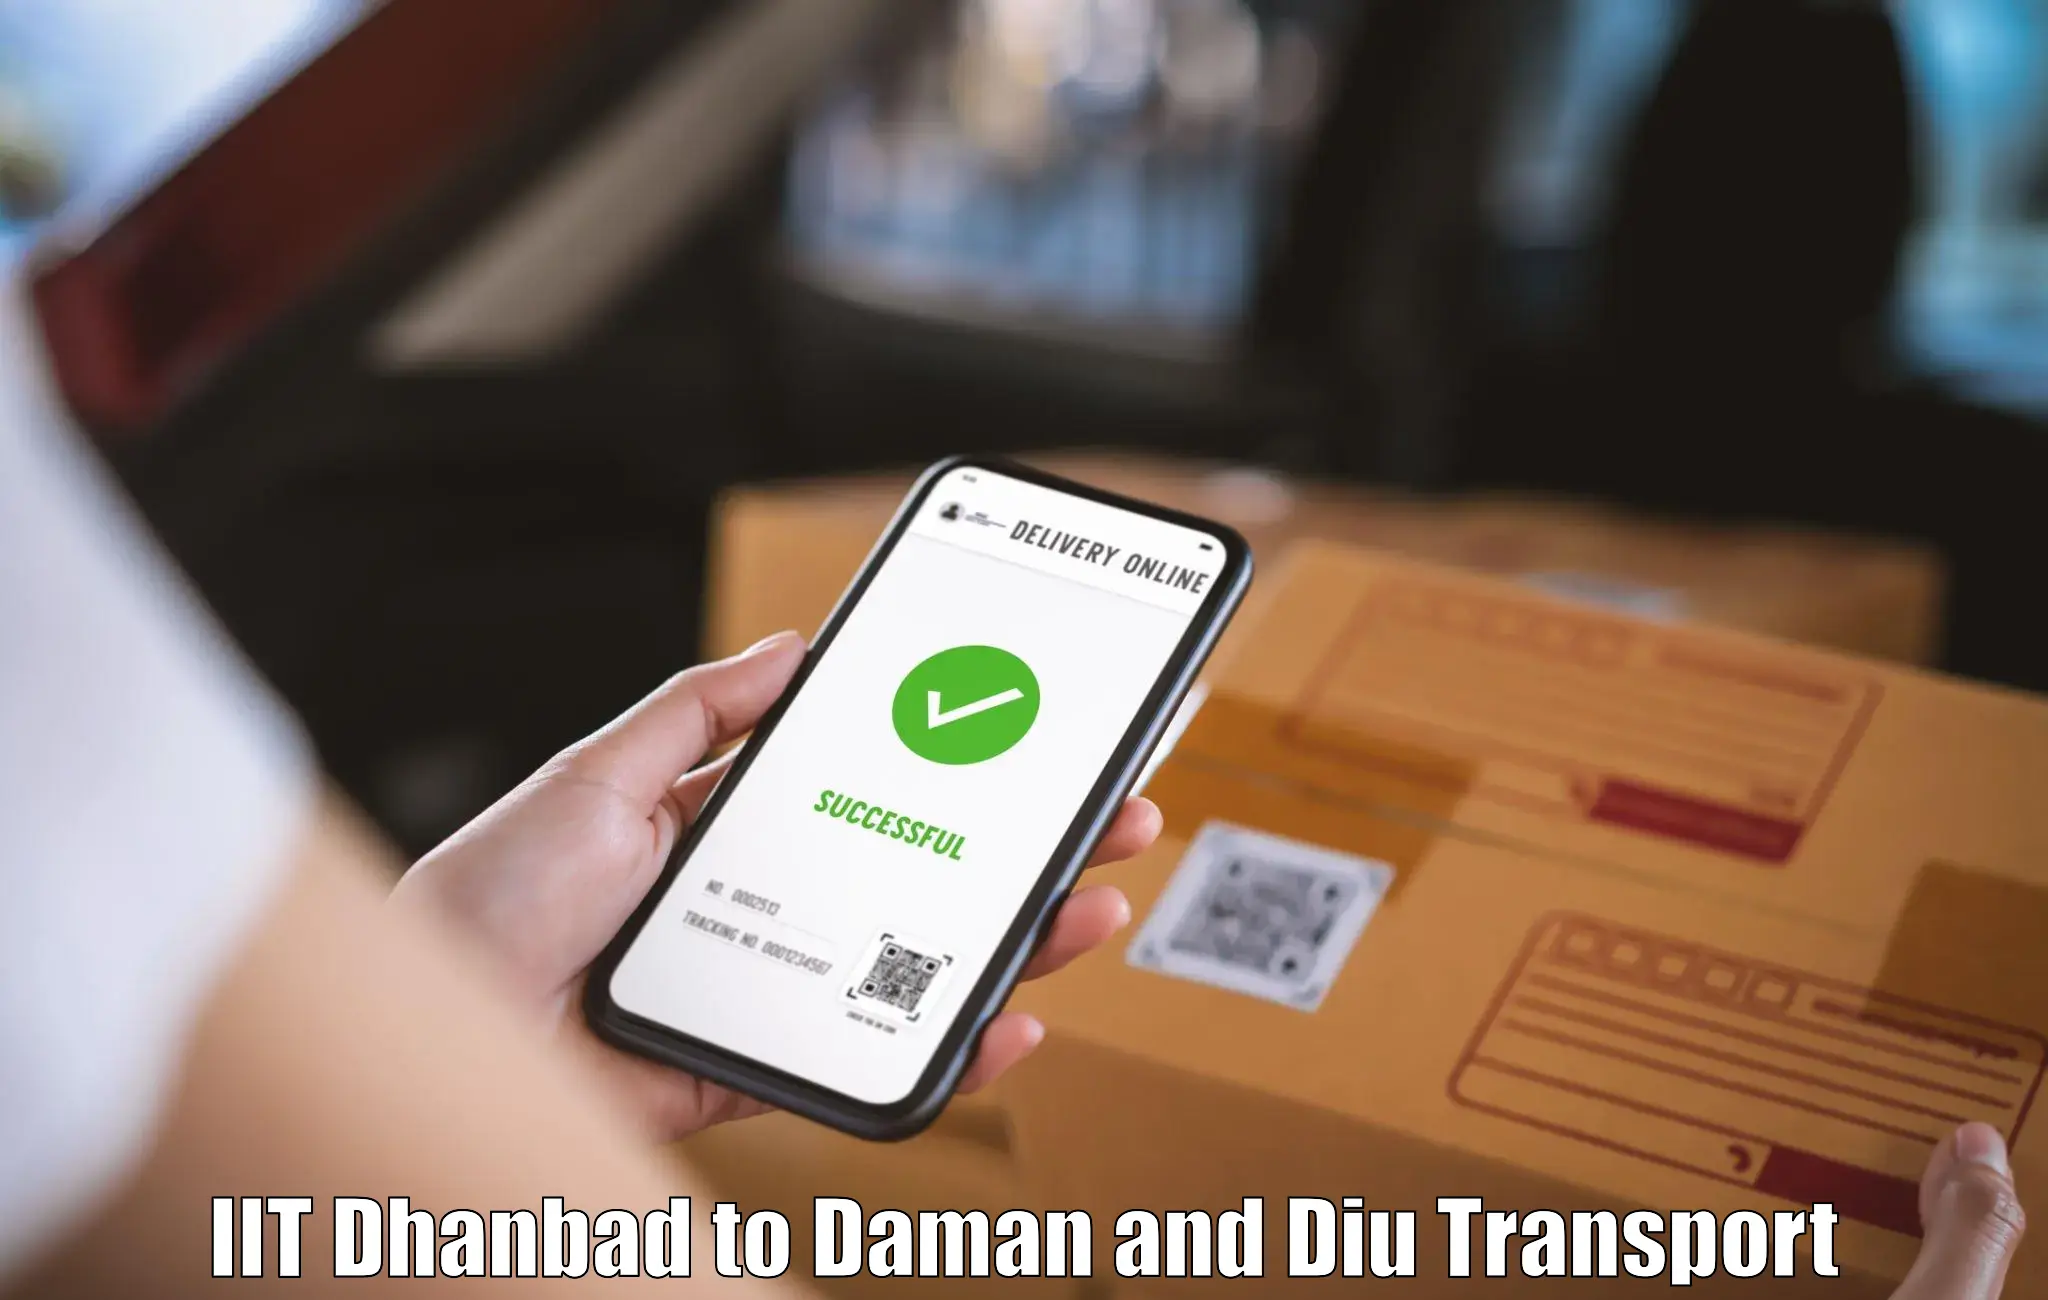 Cycle transportation service IIT Dhanbad to Daman and Diu